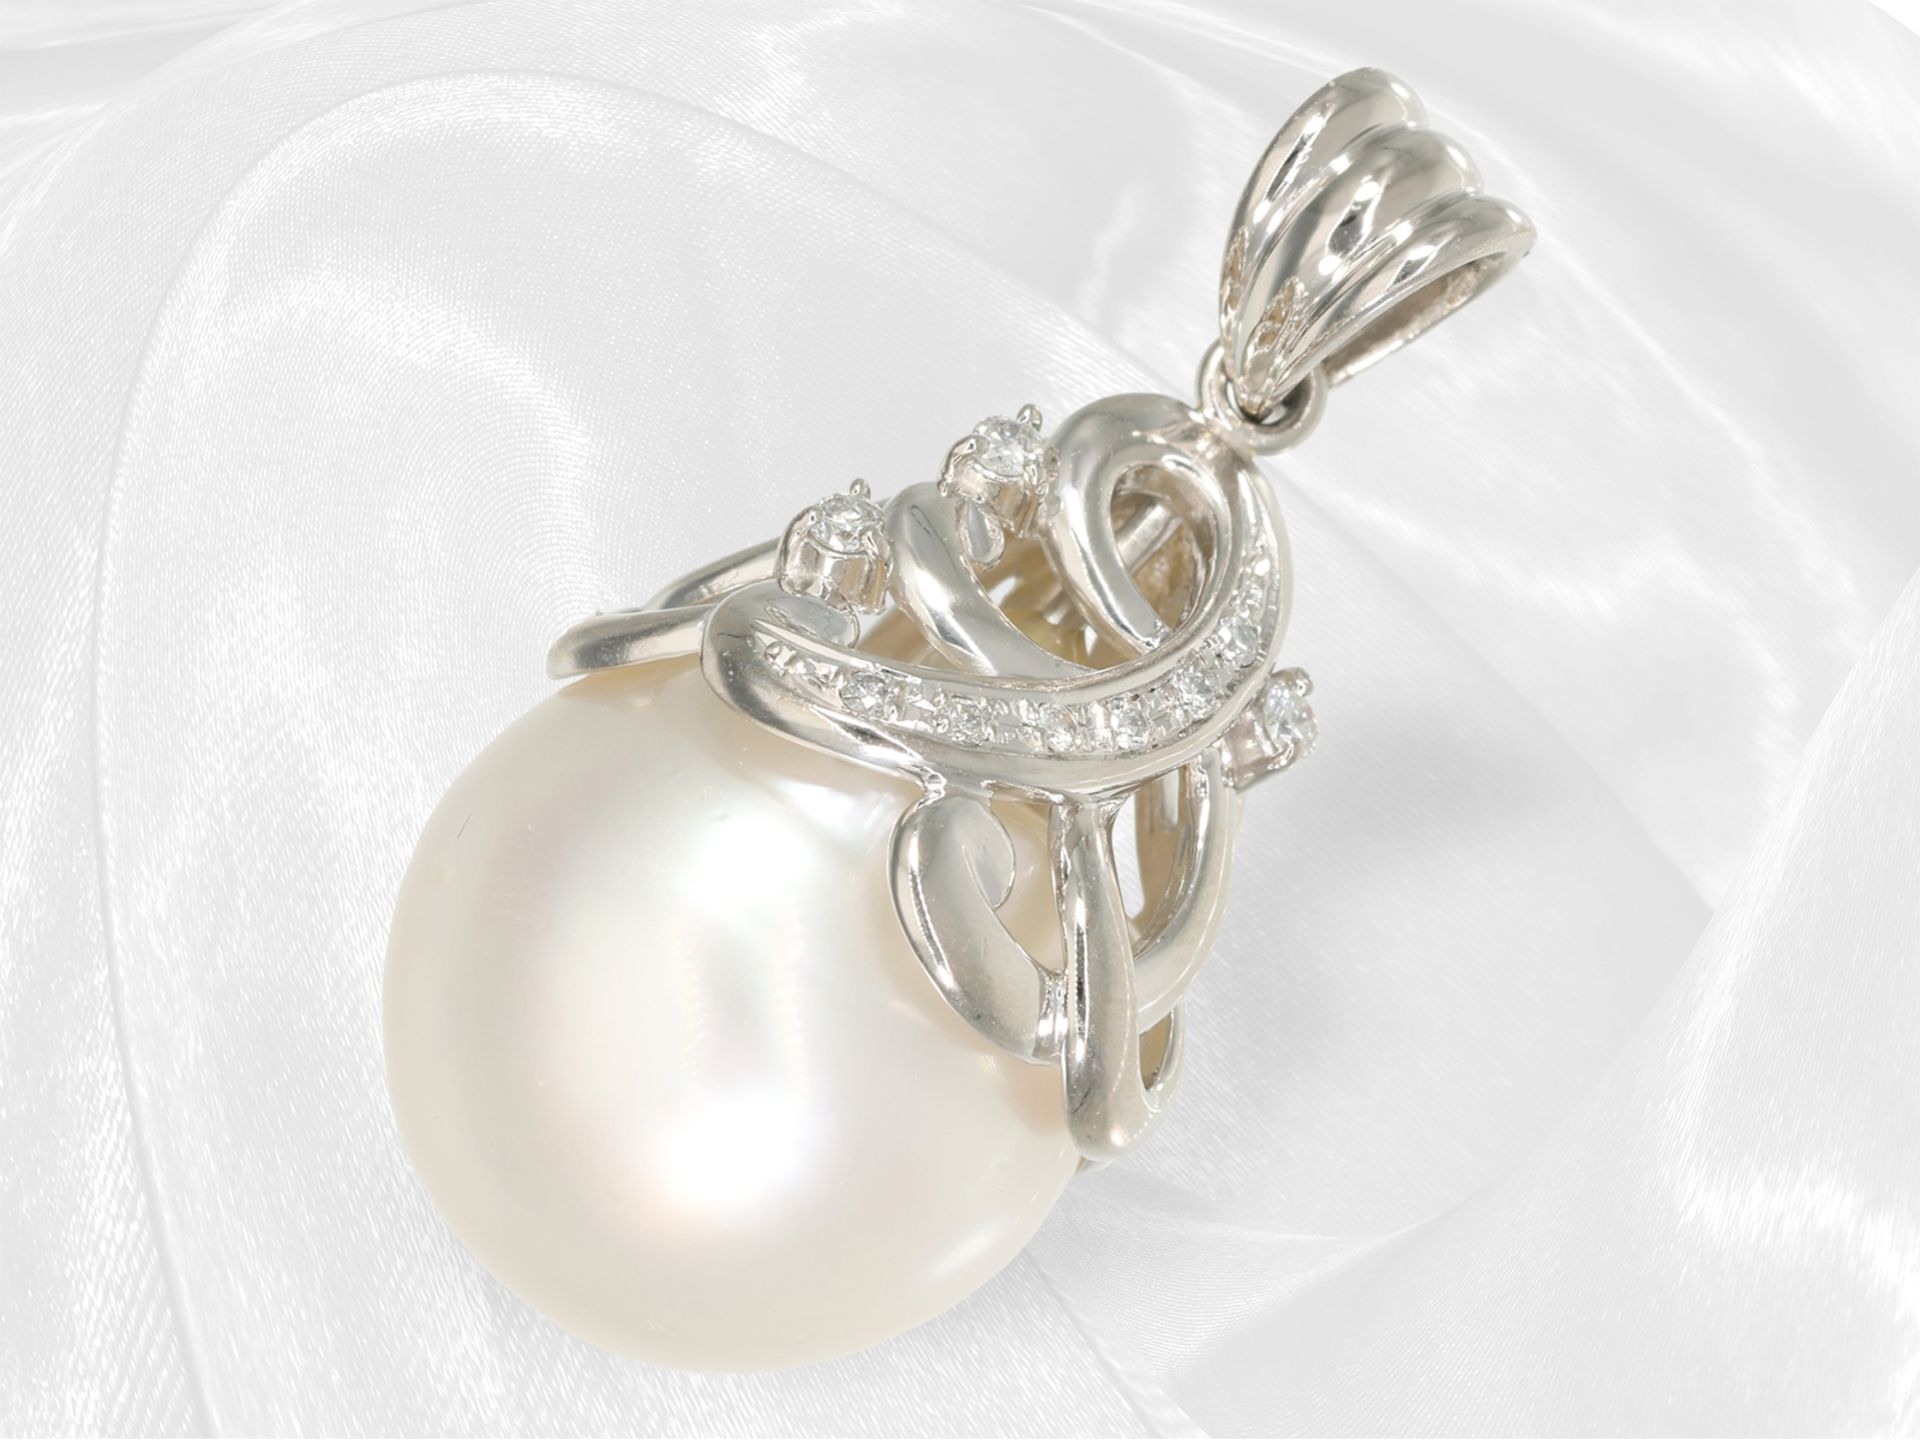 Beautiful unworn platinum South Sea pearl pendant with brilliant-cut diamonds - Image 5 of 10